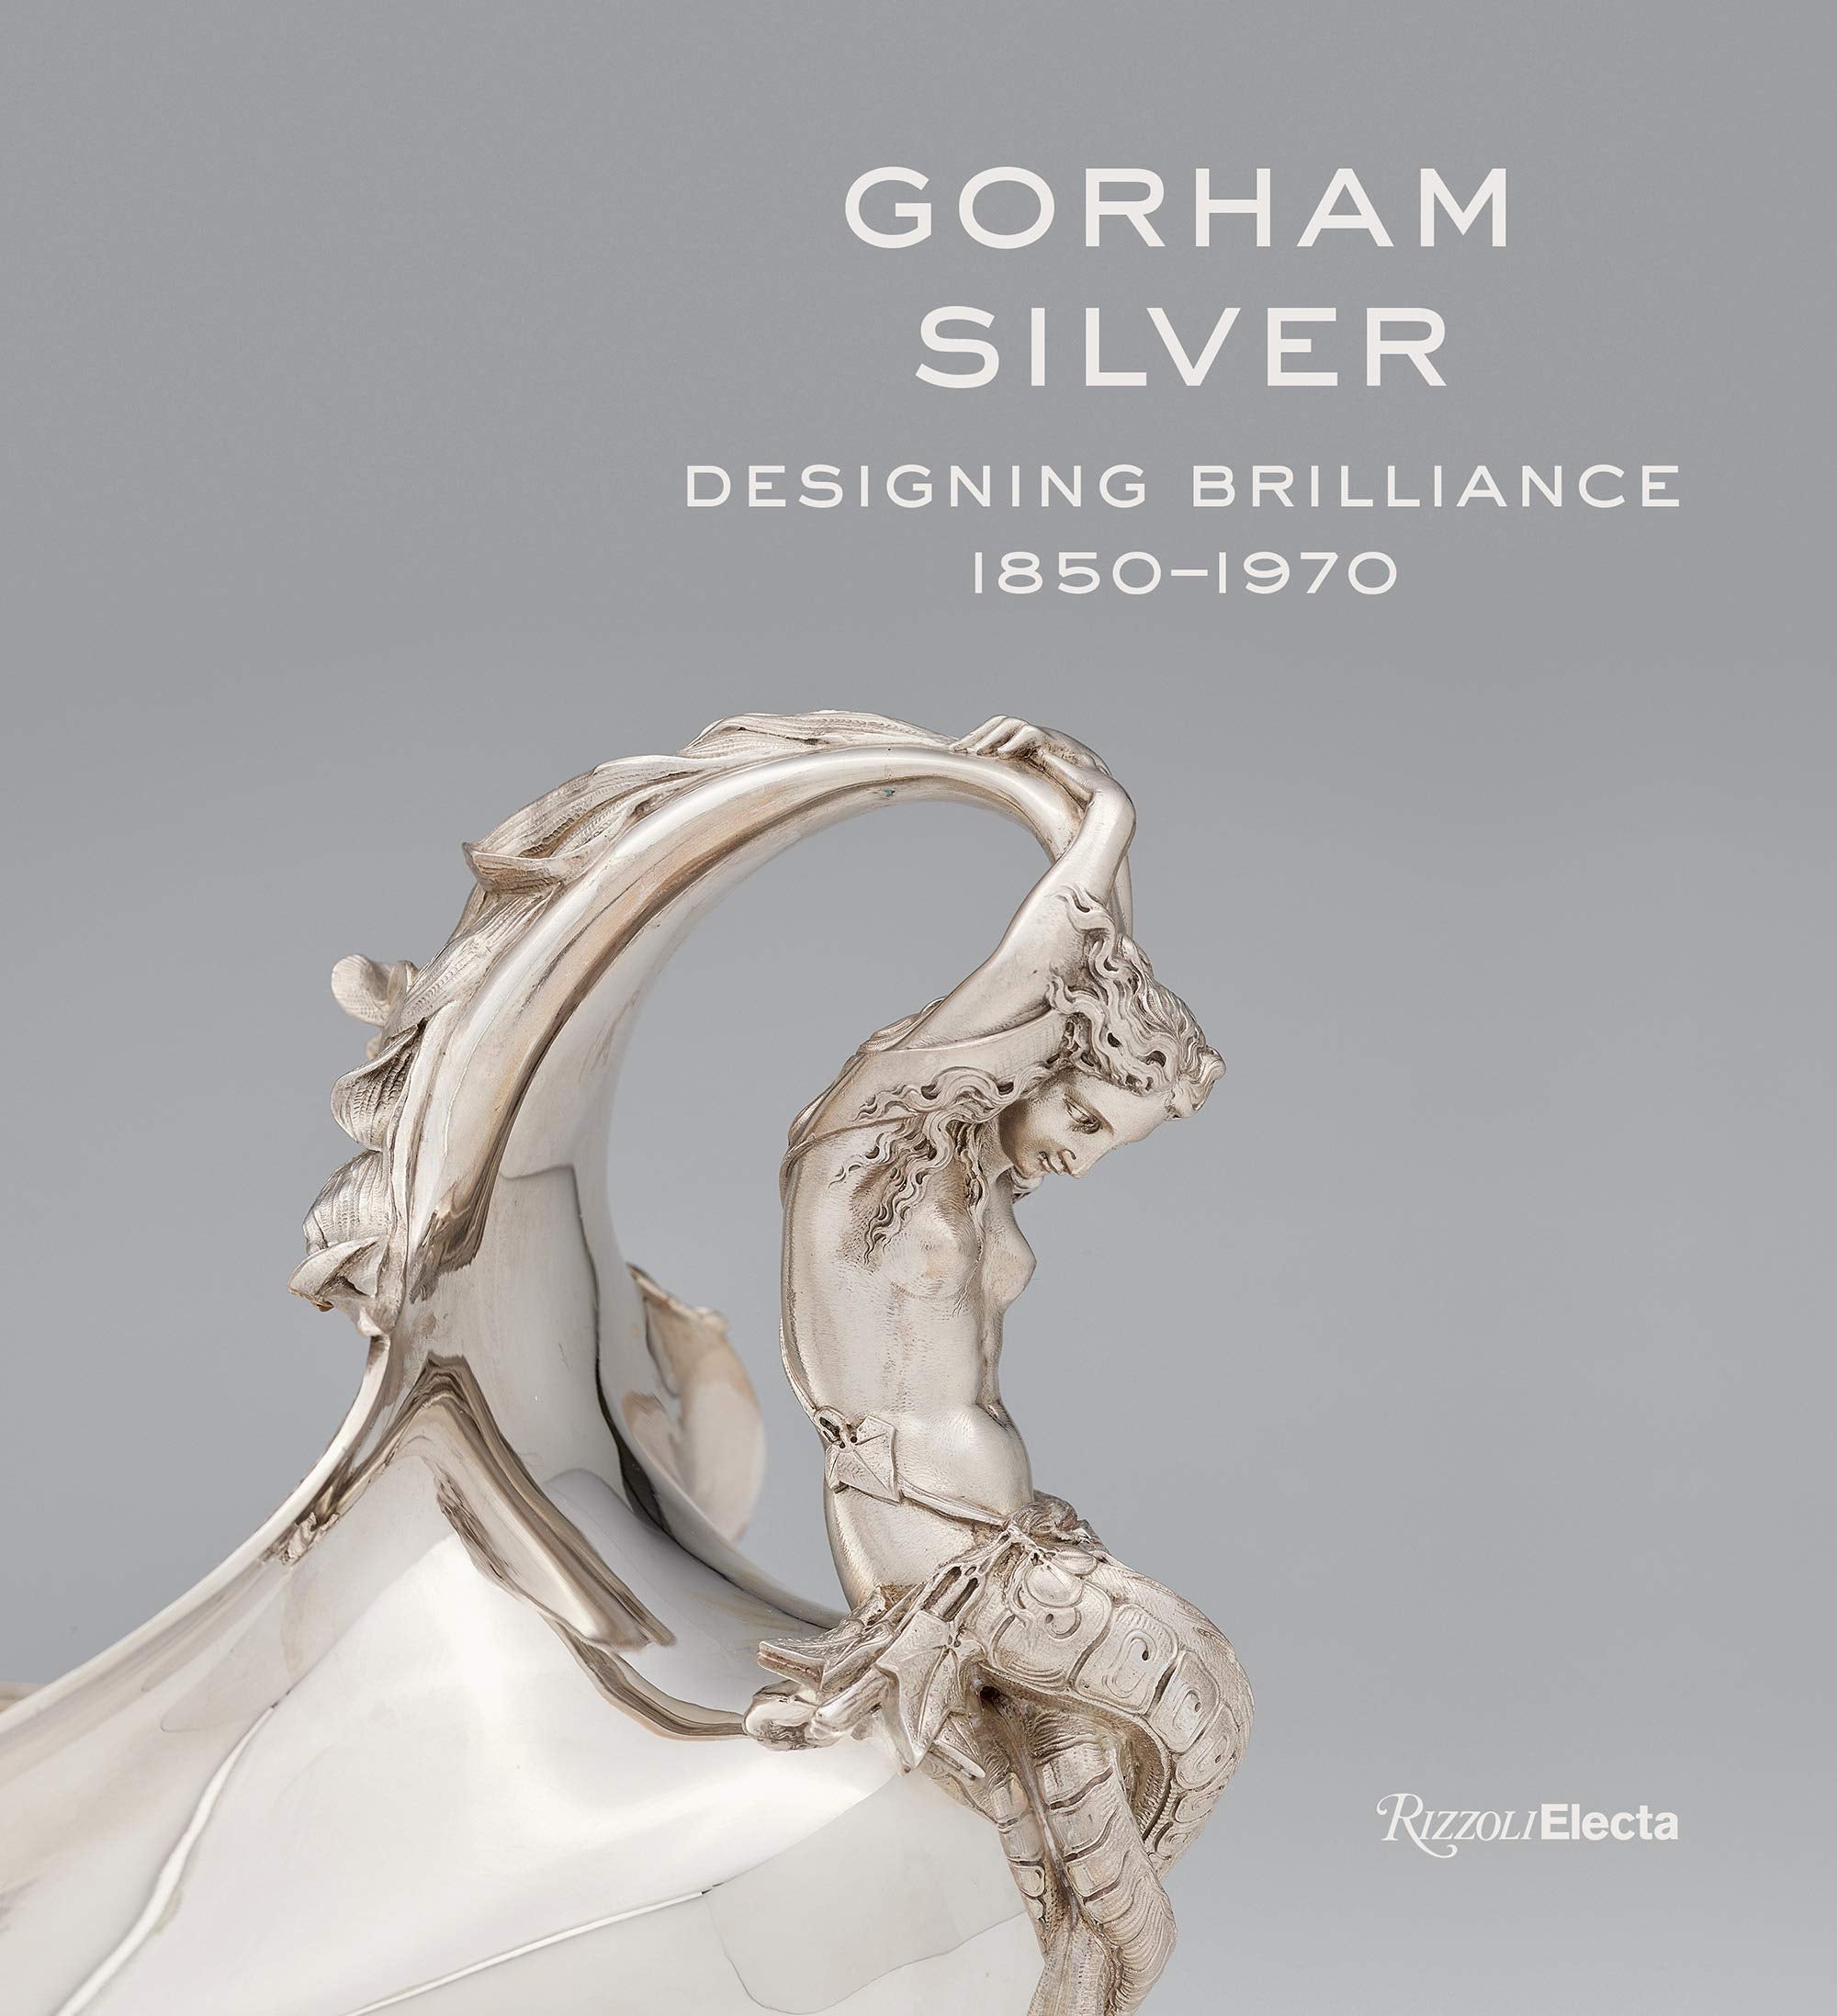 Gorham Silver, Designing Brilliance 1850-1970, softcover